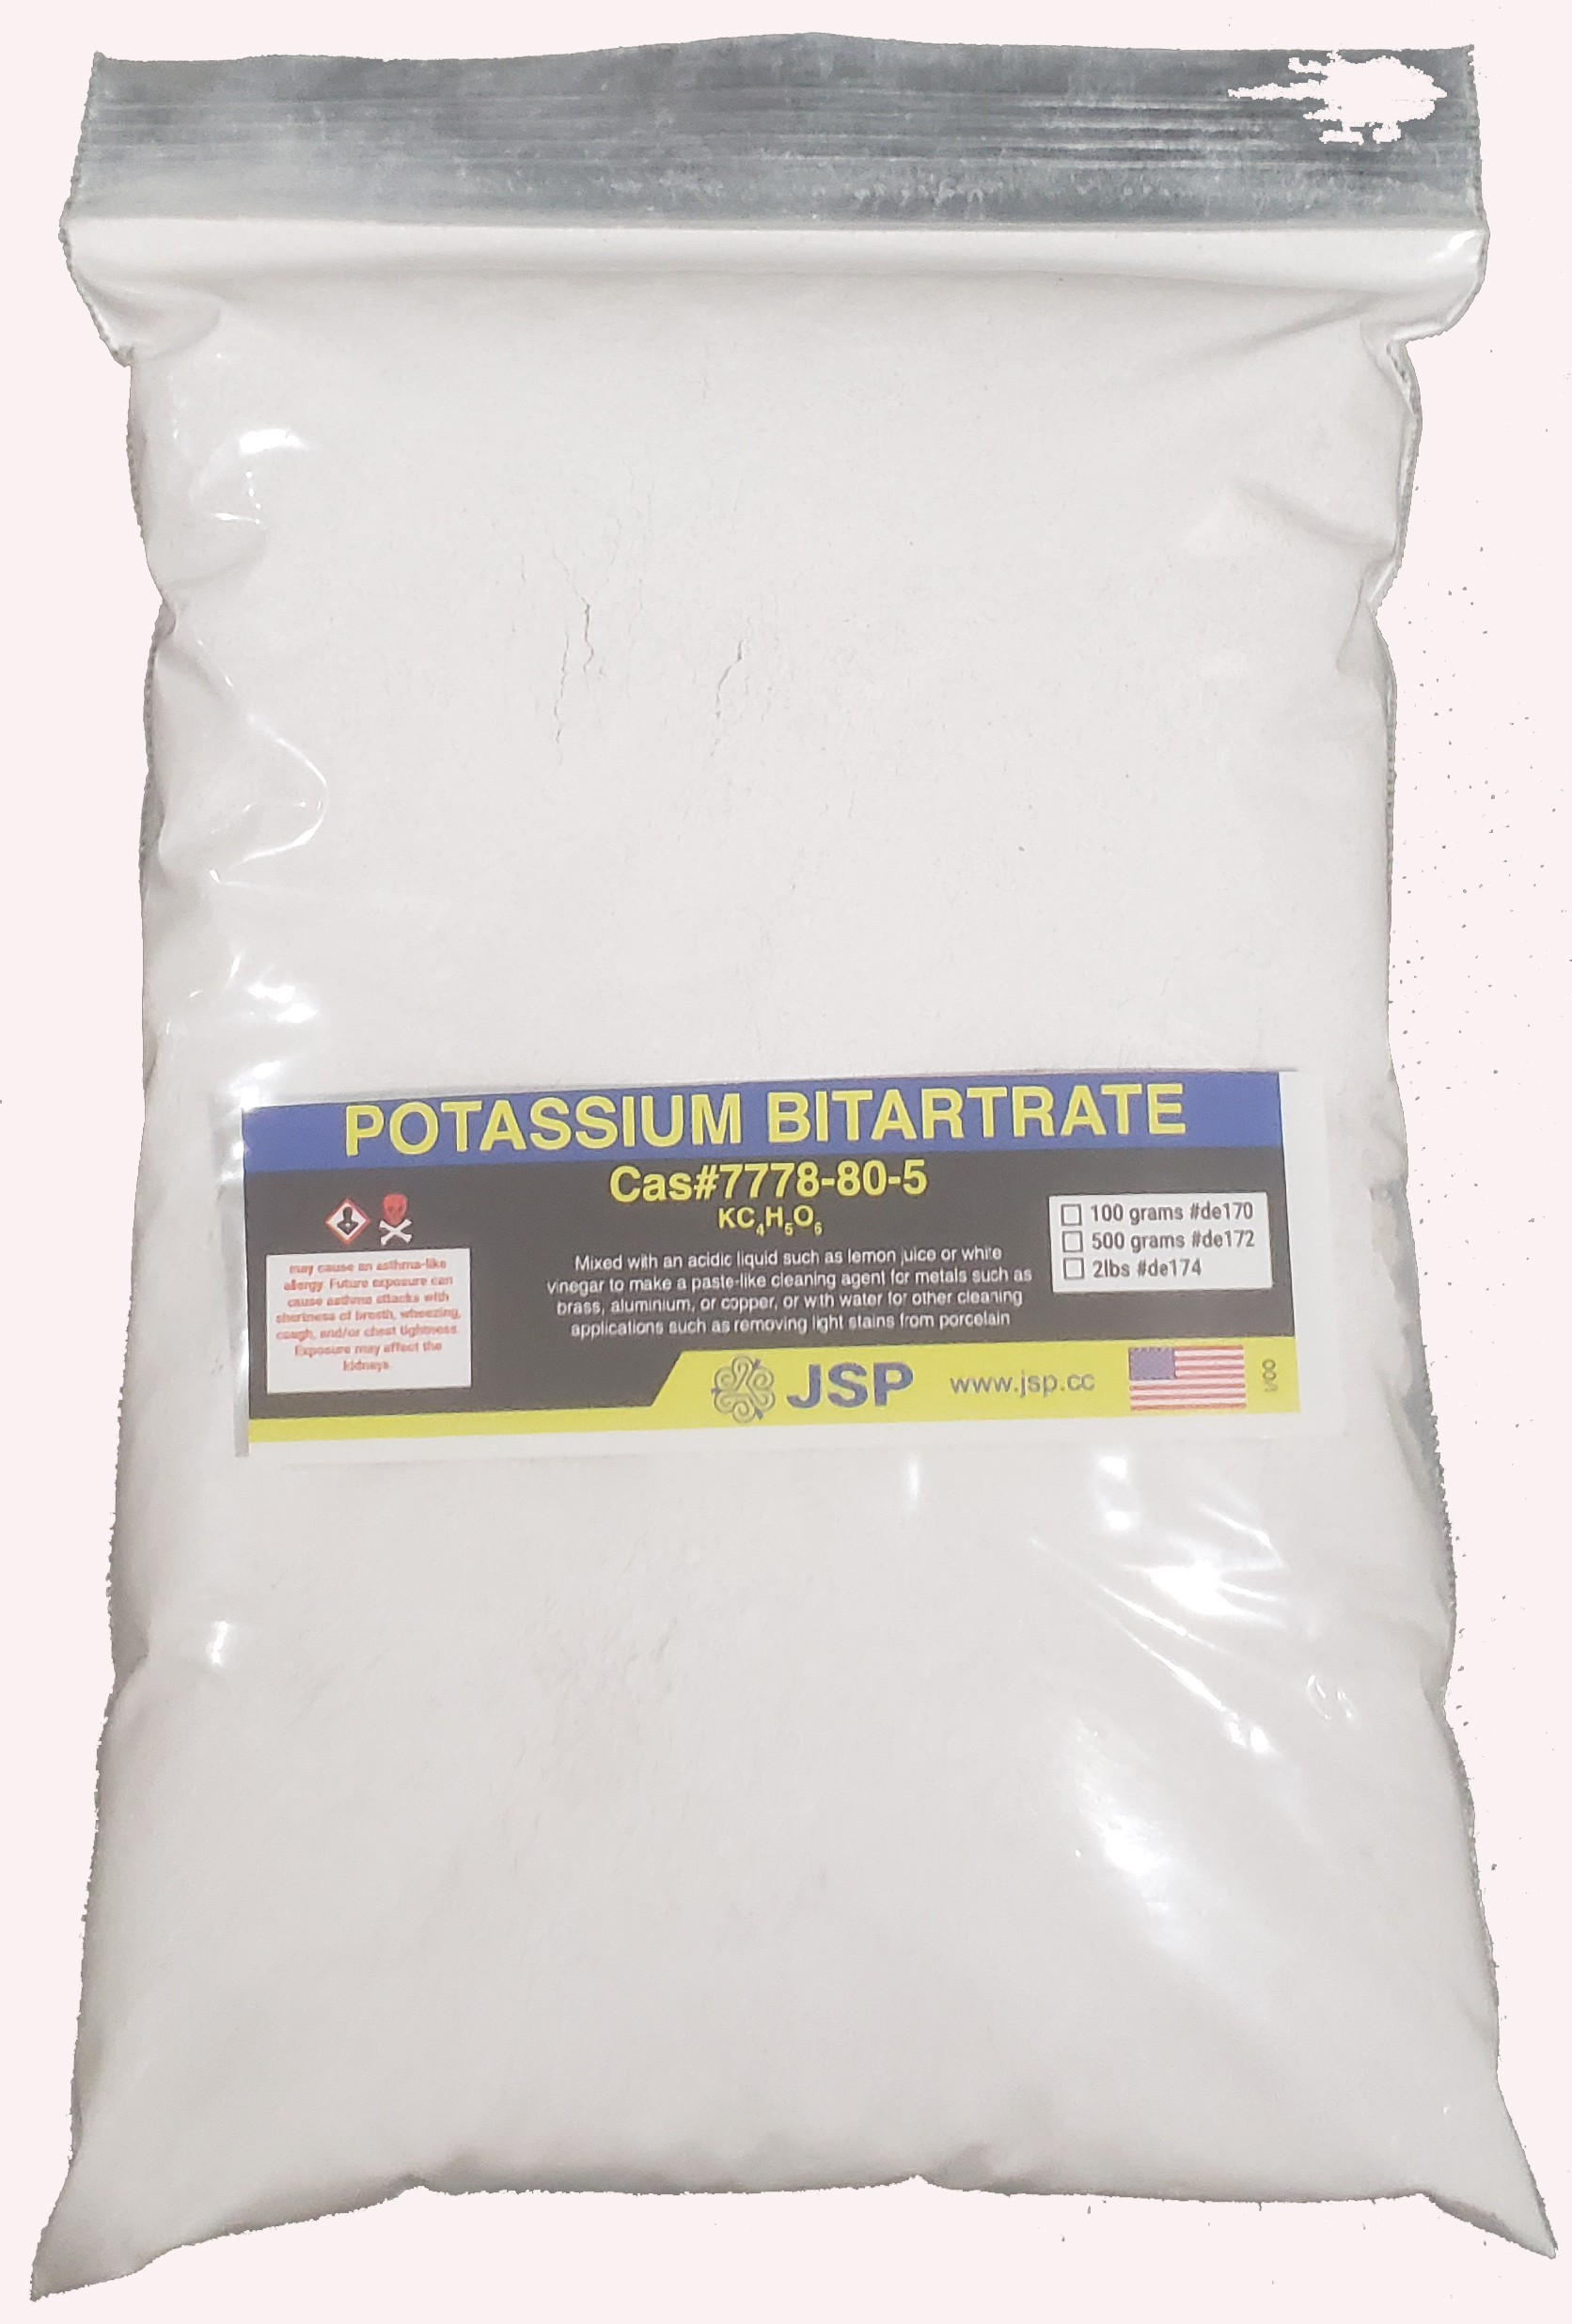 POTASSIUM BITARTRATE 500 grams